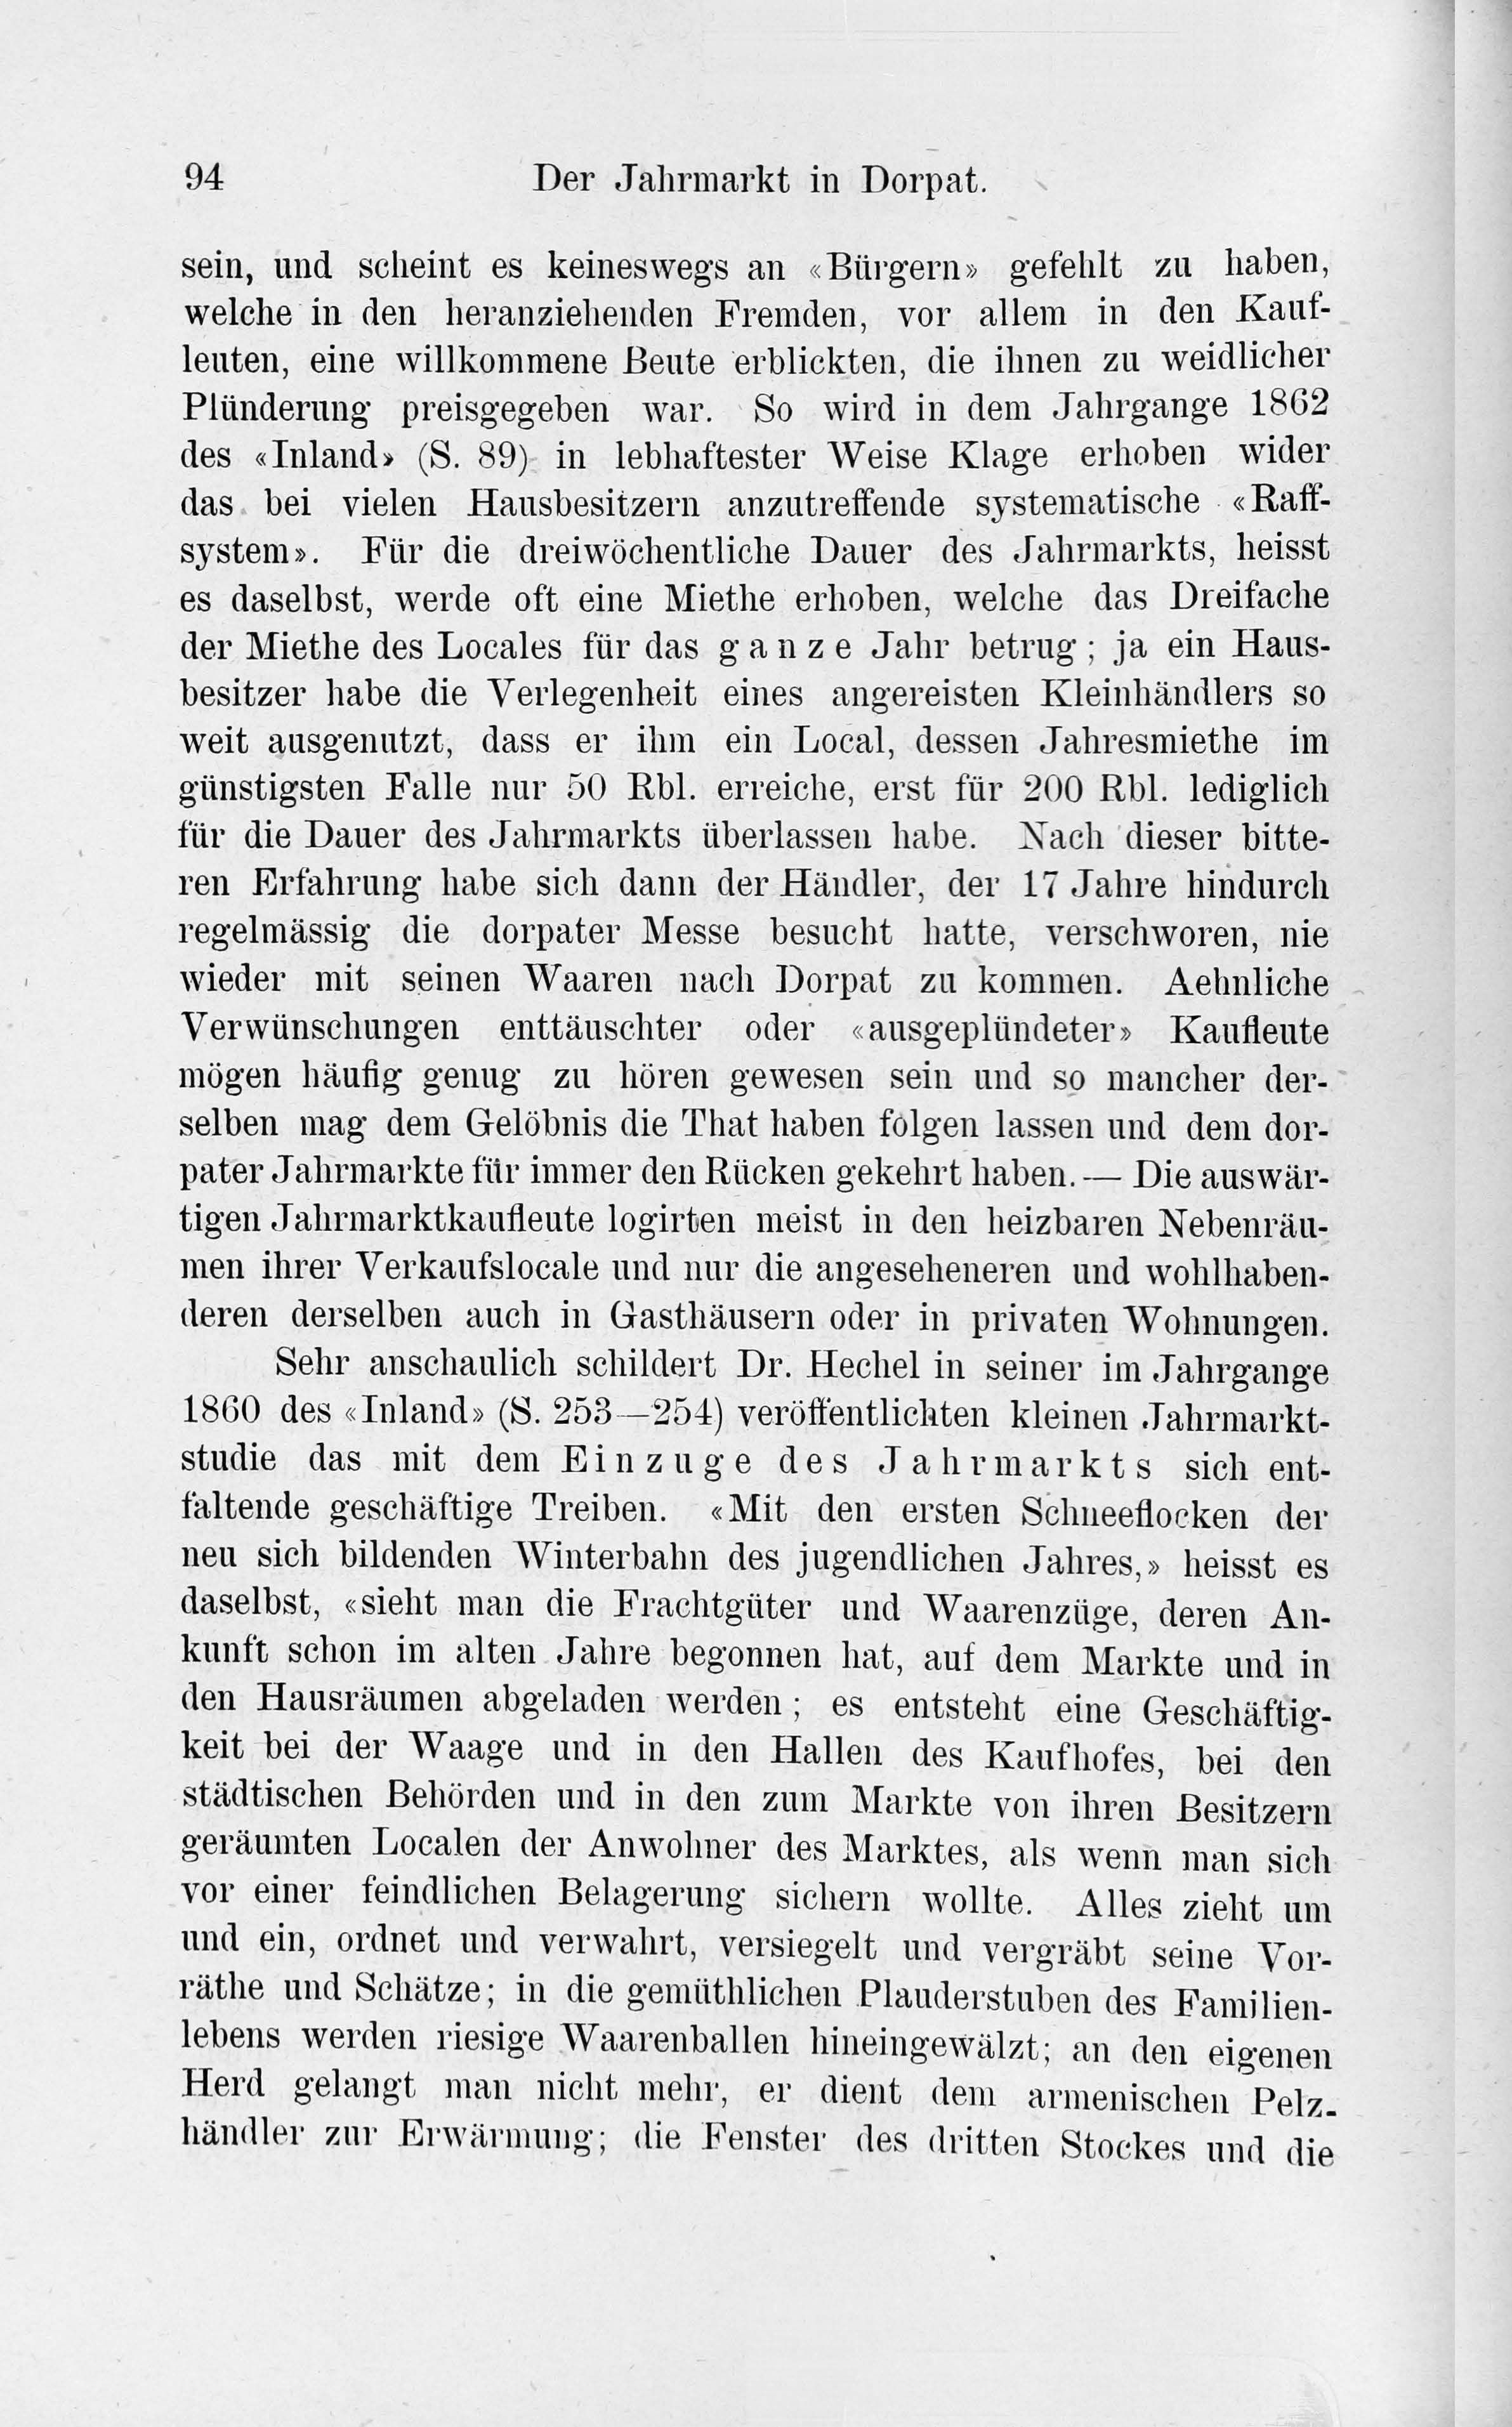 Der Jahrmarkt in Dorpat [2] (1884) | 14. Основной текст